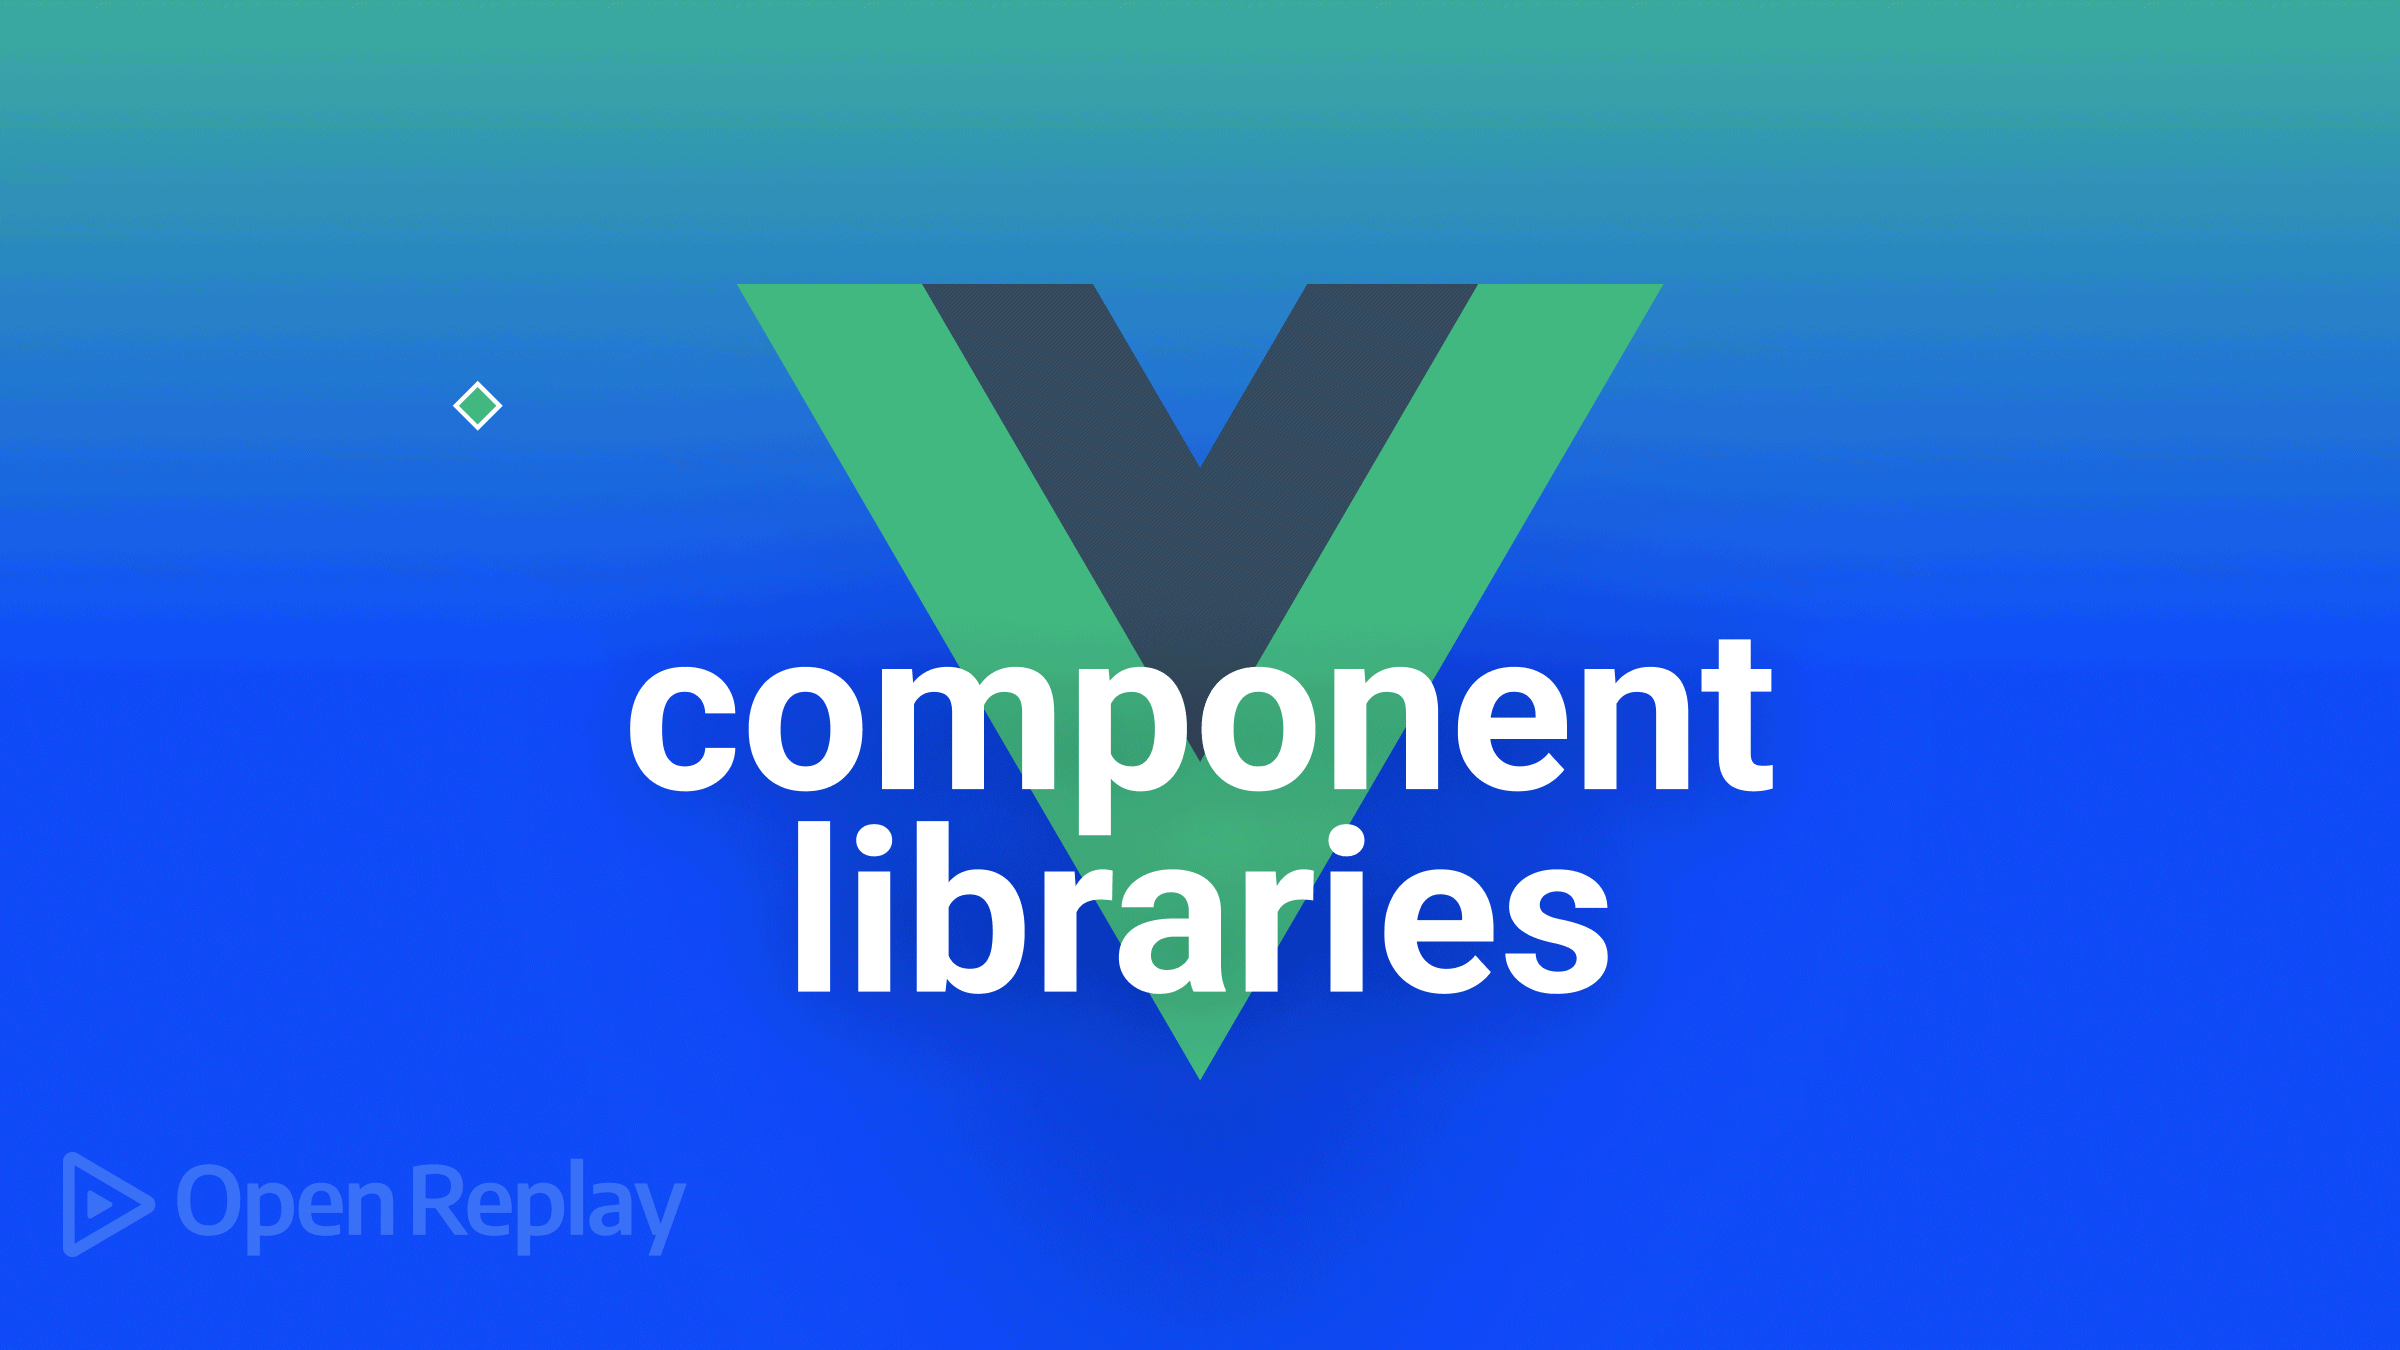 Vue component libraries